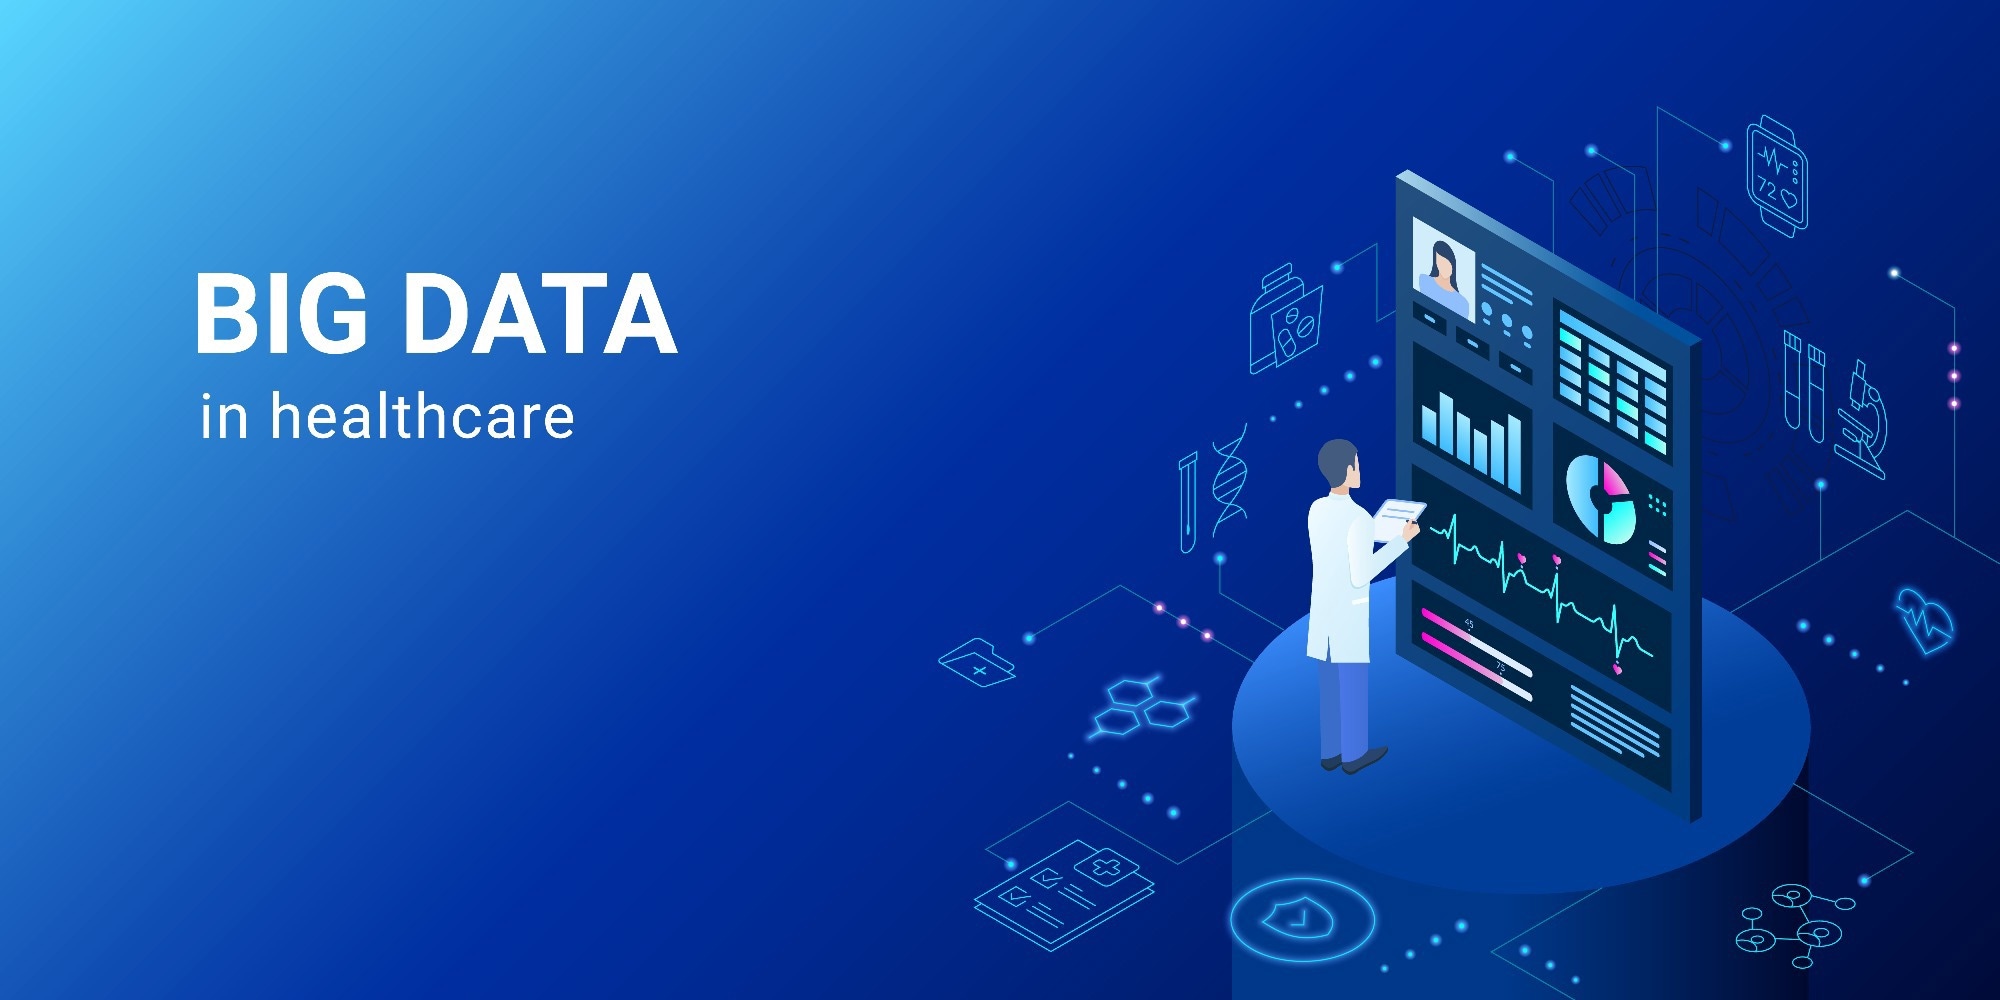 Big Data Healthcare